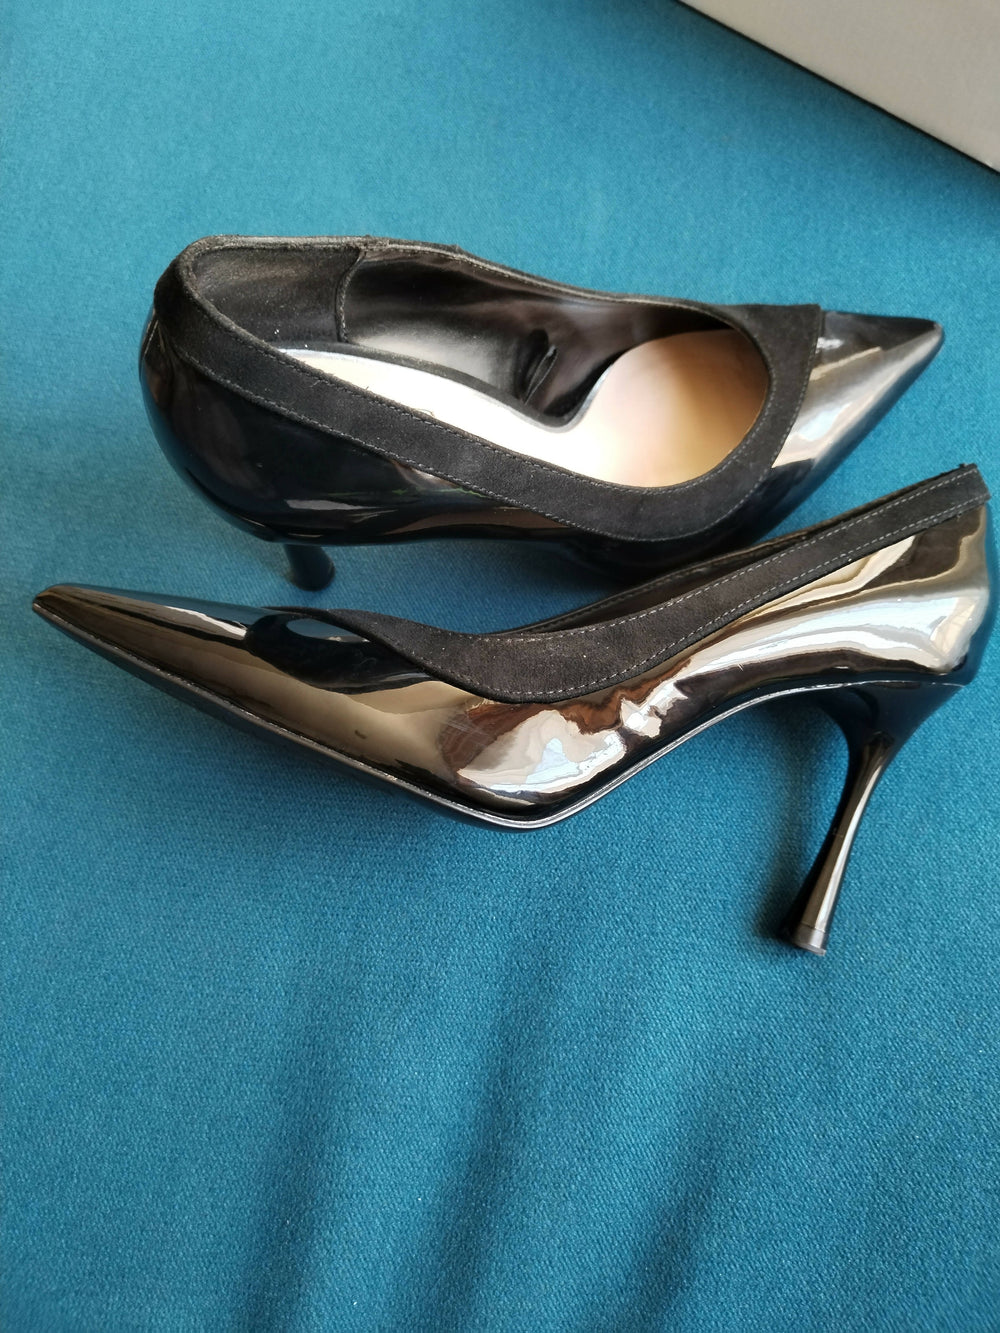 Image of Black Heels From Zara